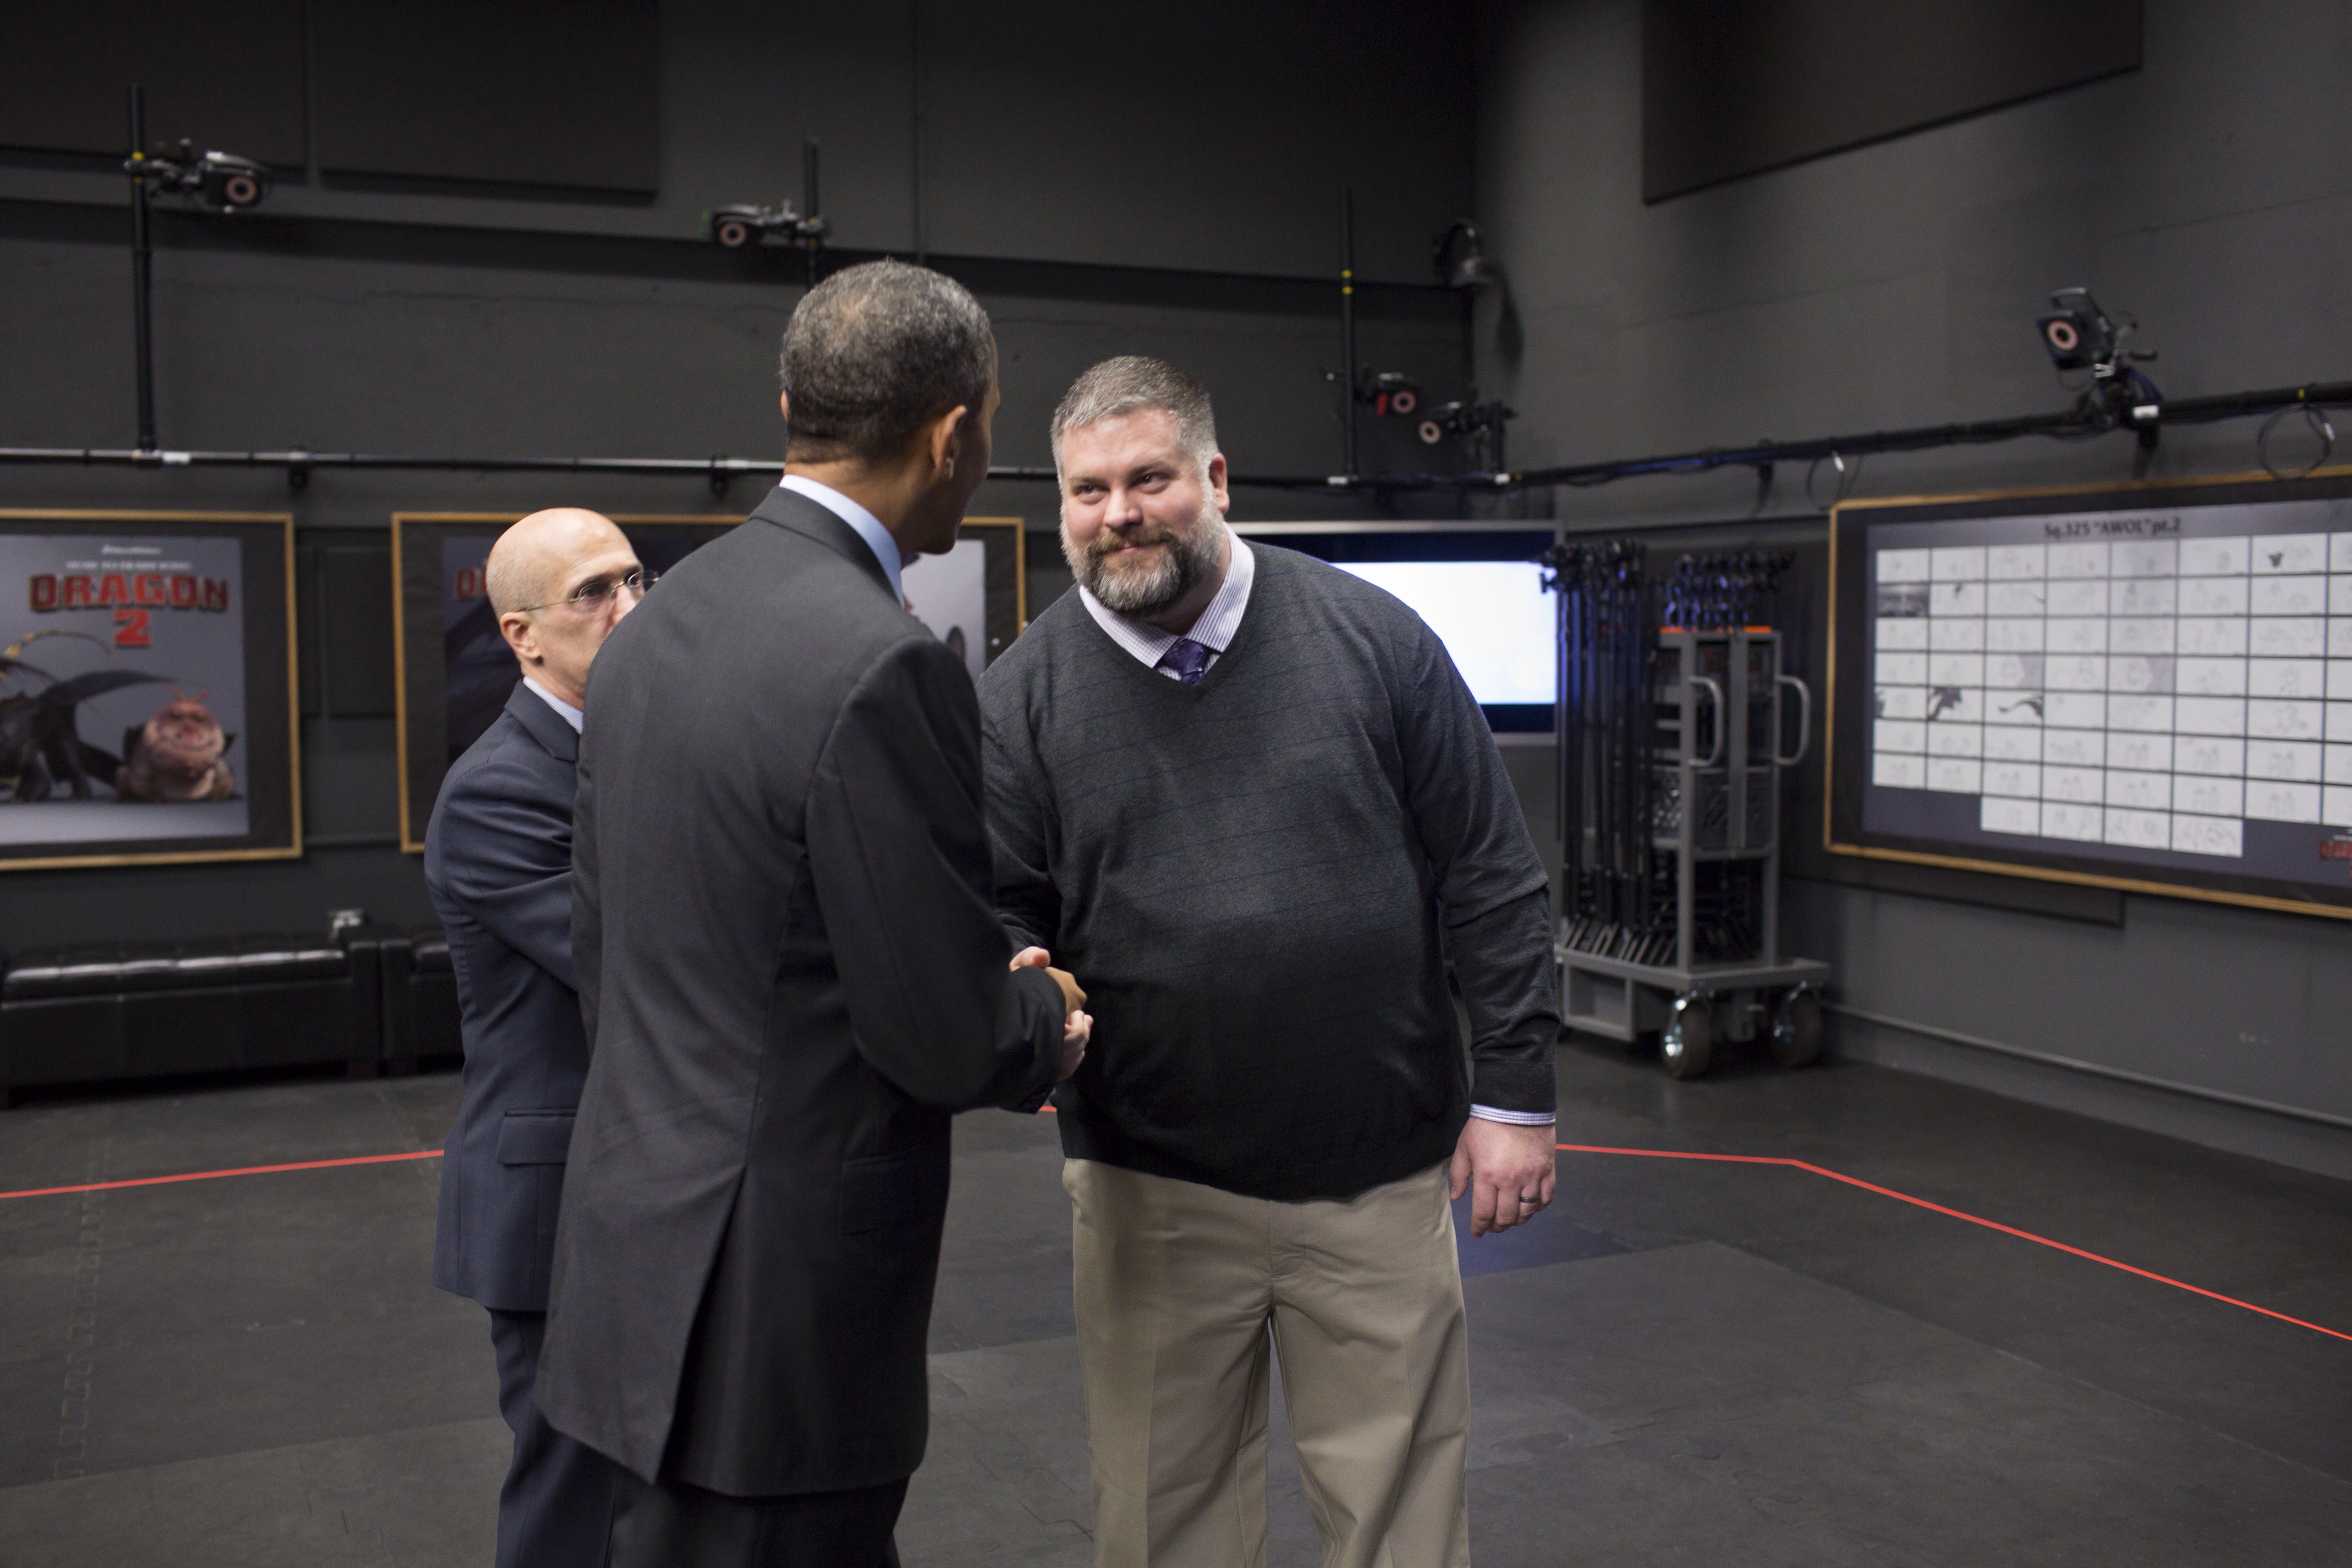 President Obama, Jeffrey Katzenberg, and Dean DeBlois during the President's visit to Dreamworks Animation, 11-26-13